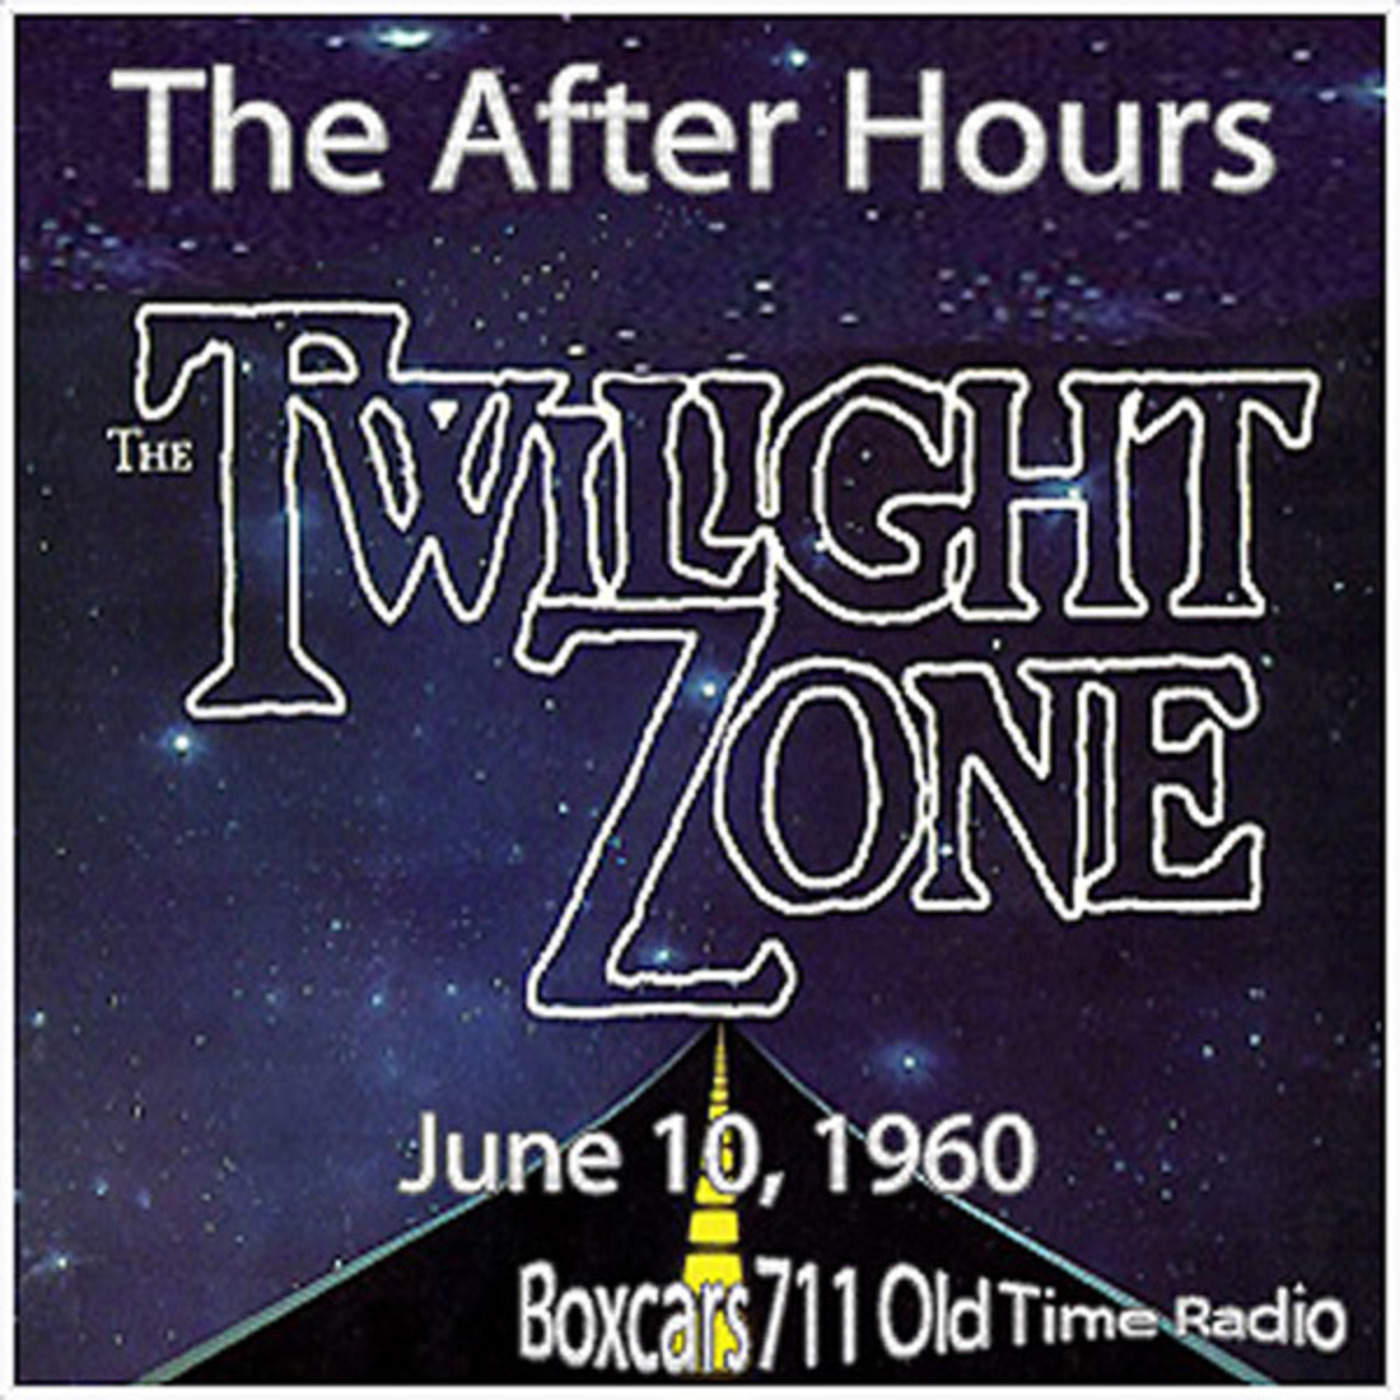 Episode 9682: Twilight Zone - 